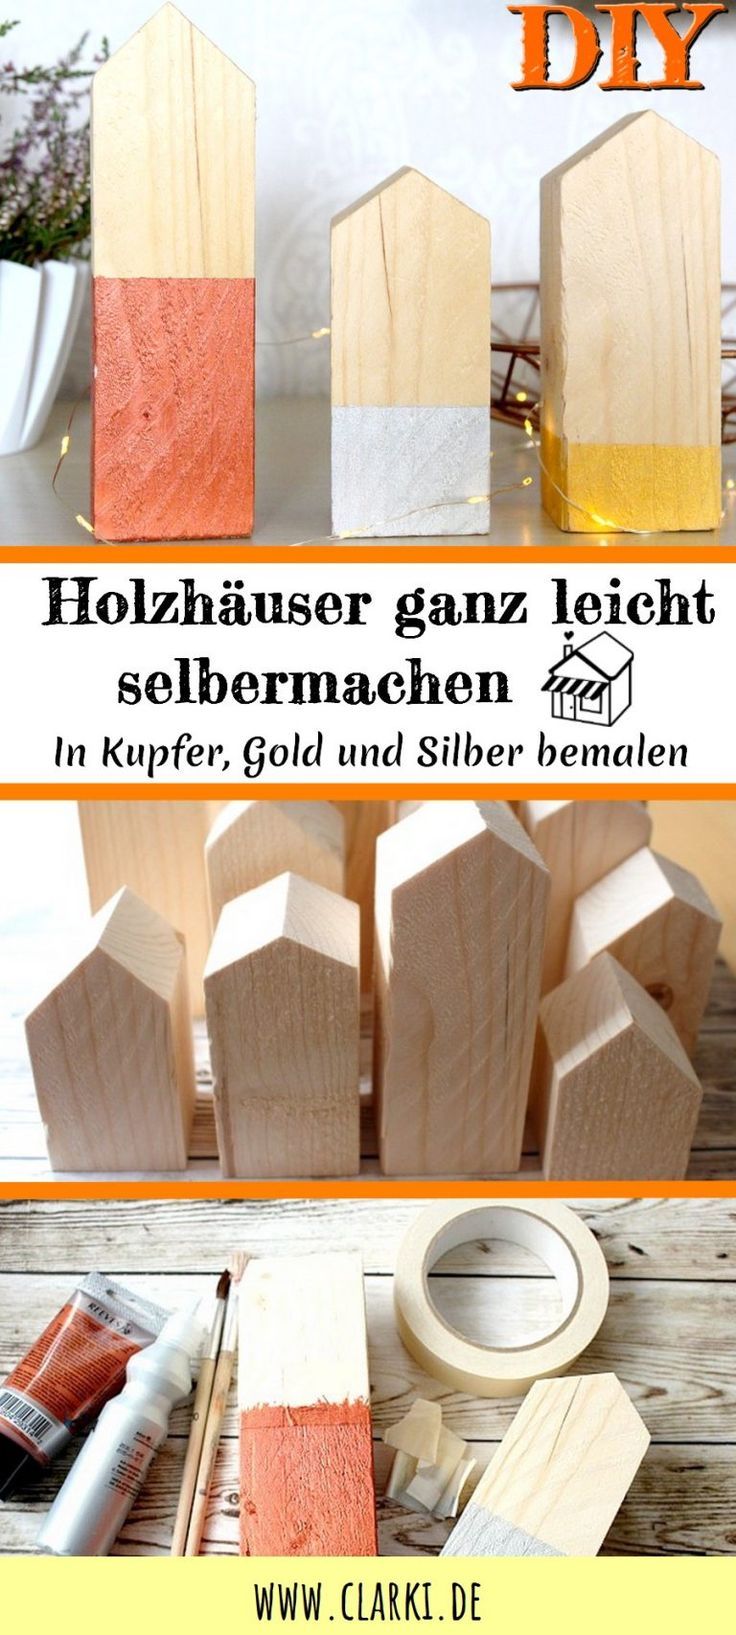 Holzfiguren Garten Selber Machen Schön Deco Diy Just Make Wooden Houses Yourself